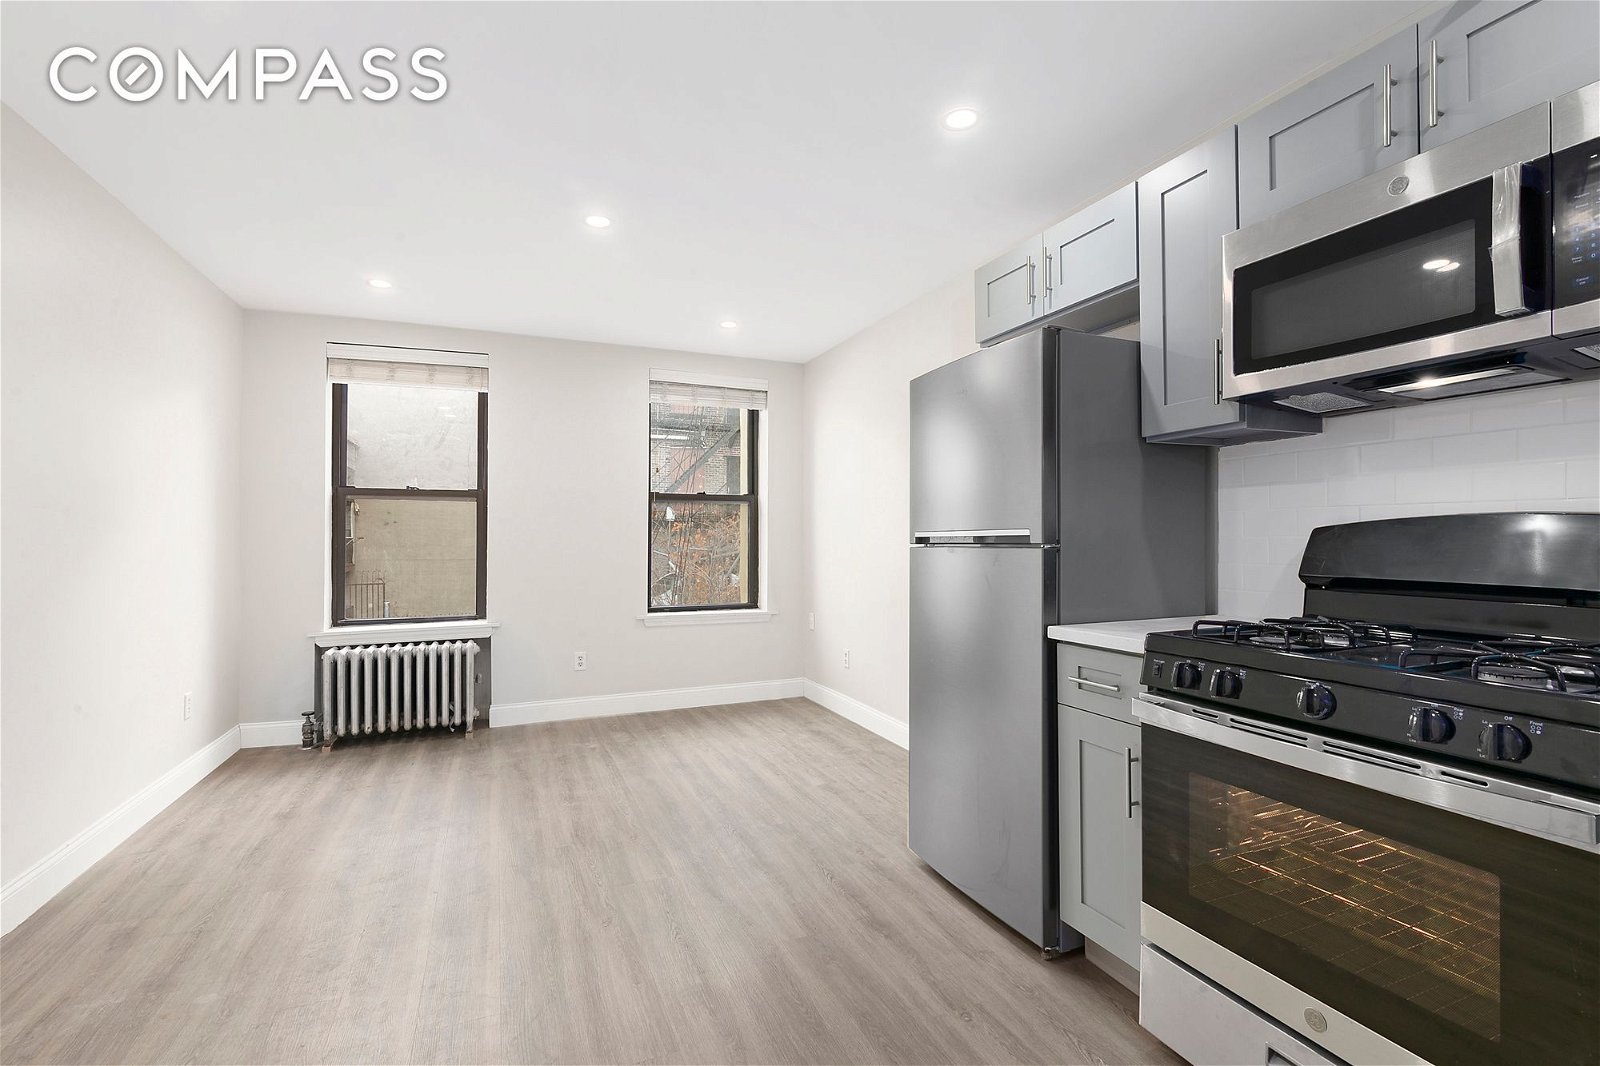 Real estate property located at 131 Eldridge #4-B, New York, New York City, NY